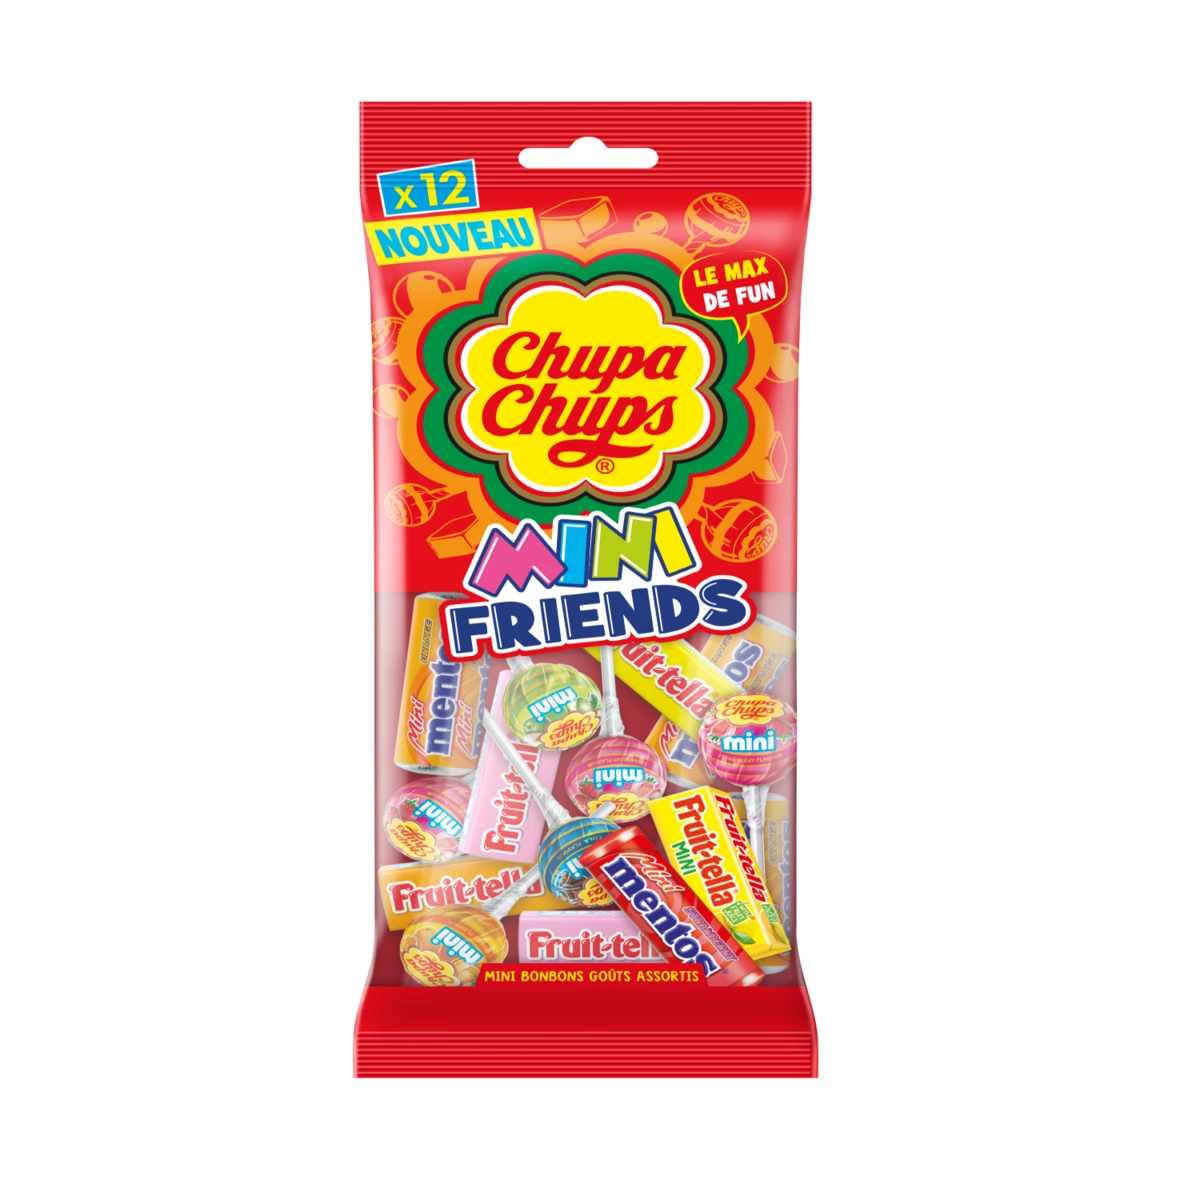 Bonbons Mix Mini Friends, 113g - CHUPA CHUPS